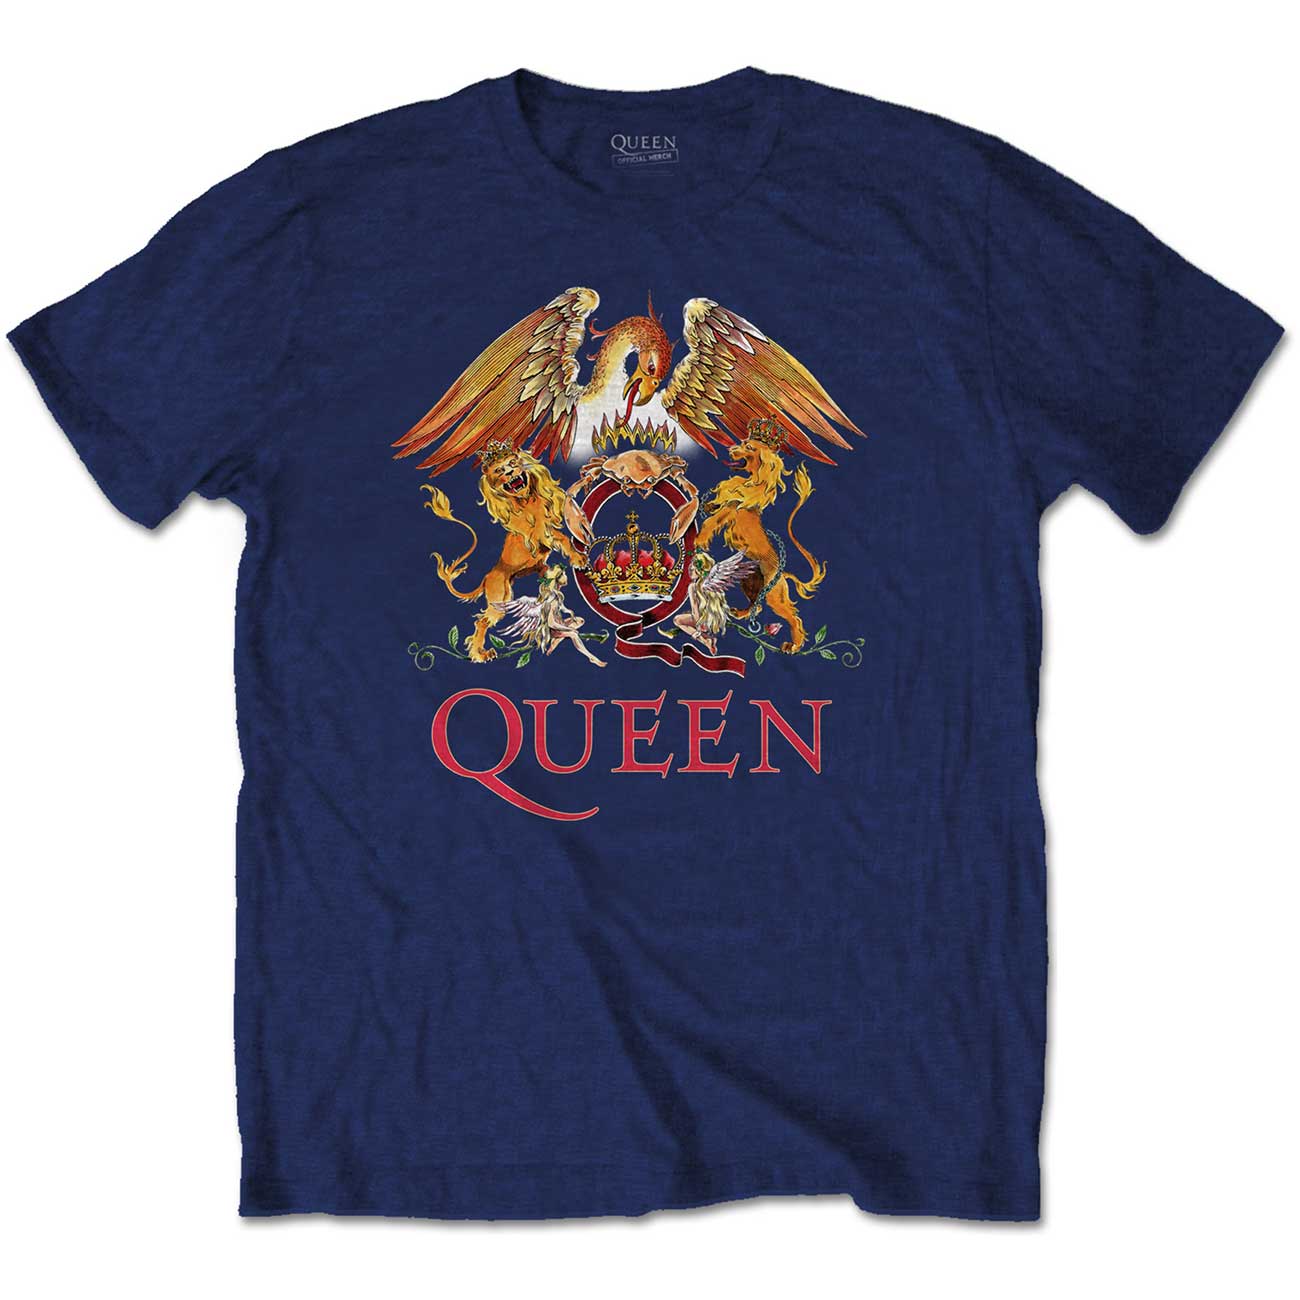 Queen - Classic Crest Navy (Small)